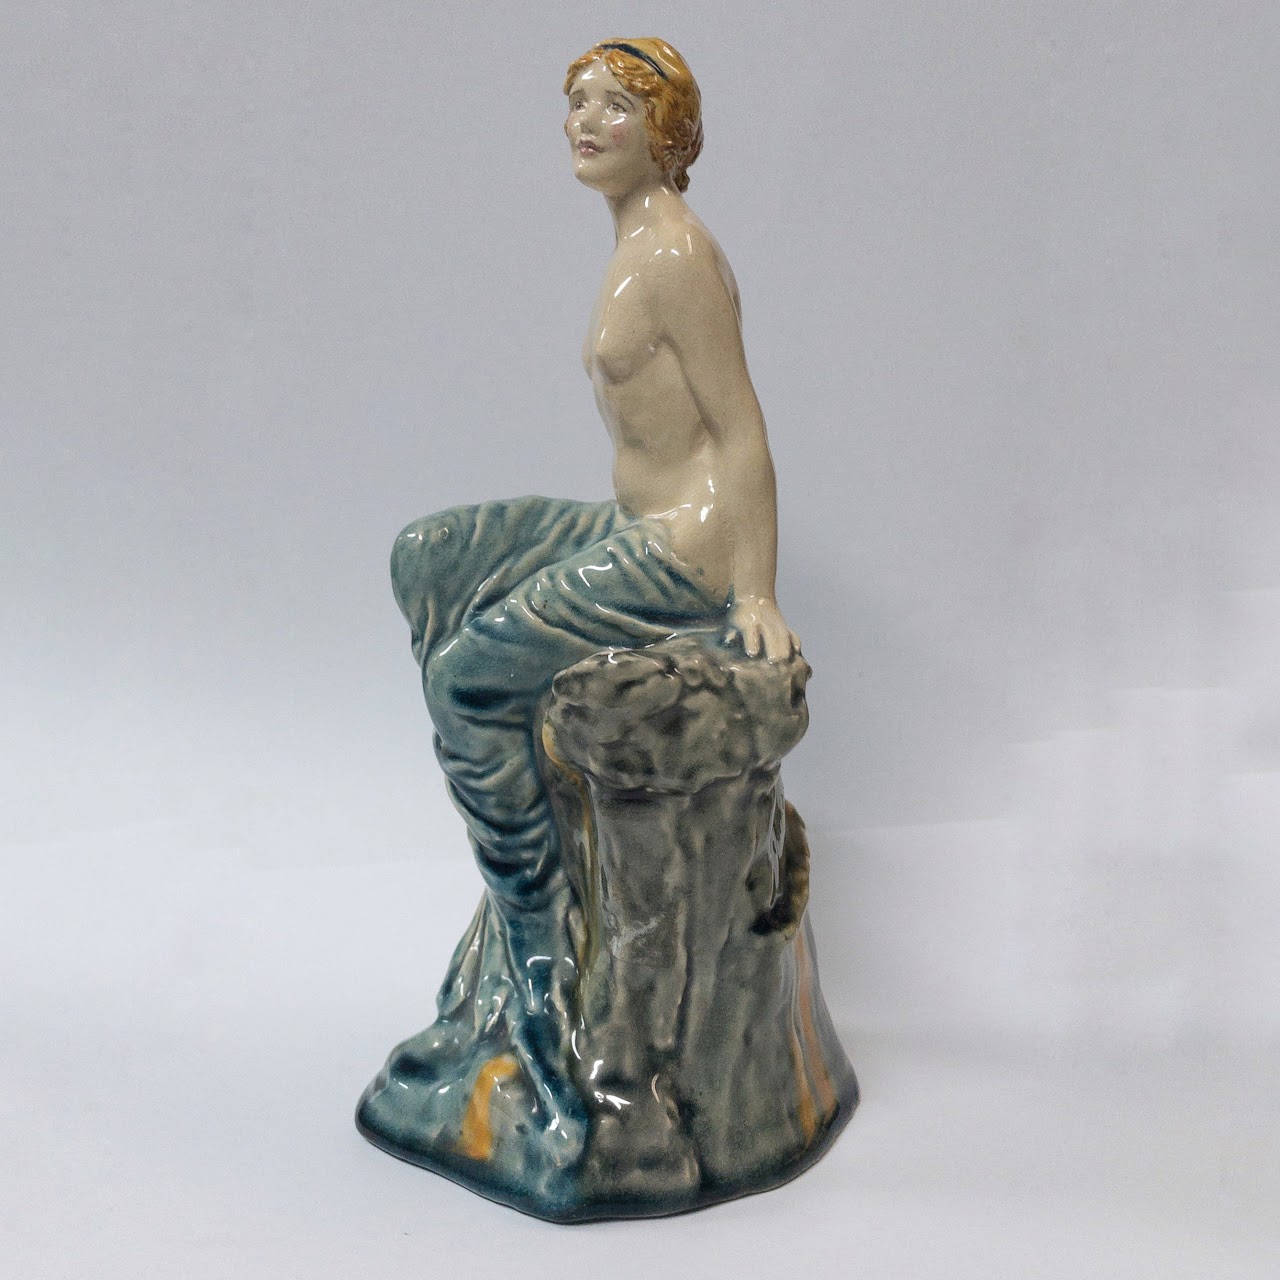 Helen Wickham 'The Bather' Figurine, c. 1920s